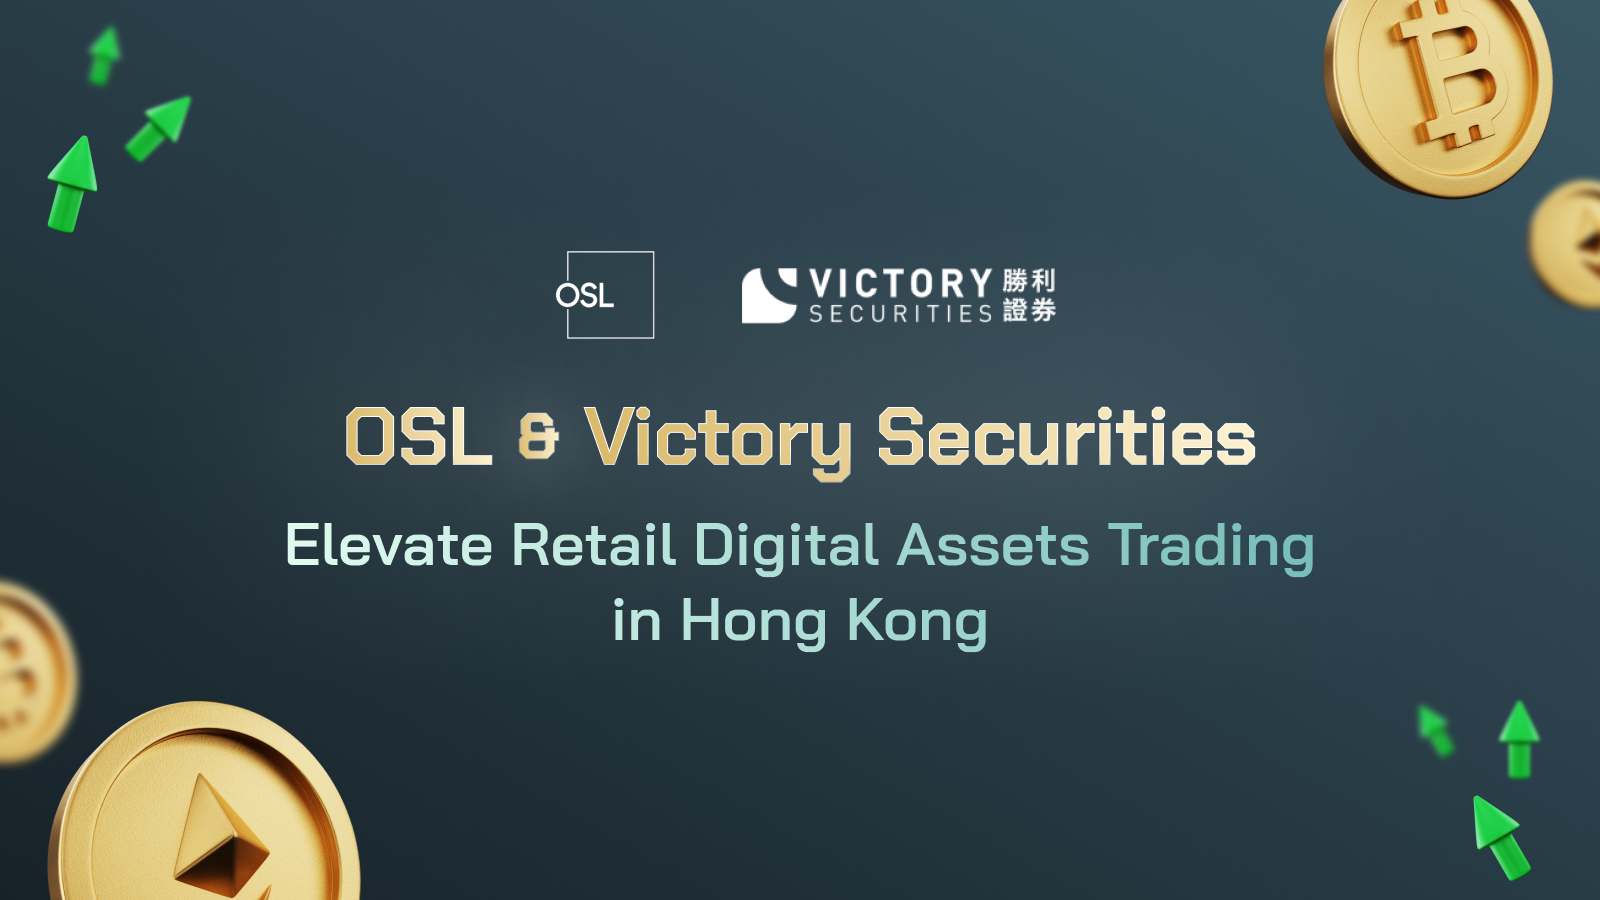 press release - victory securities